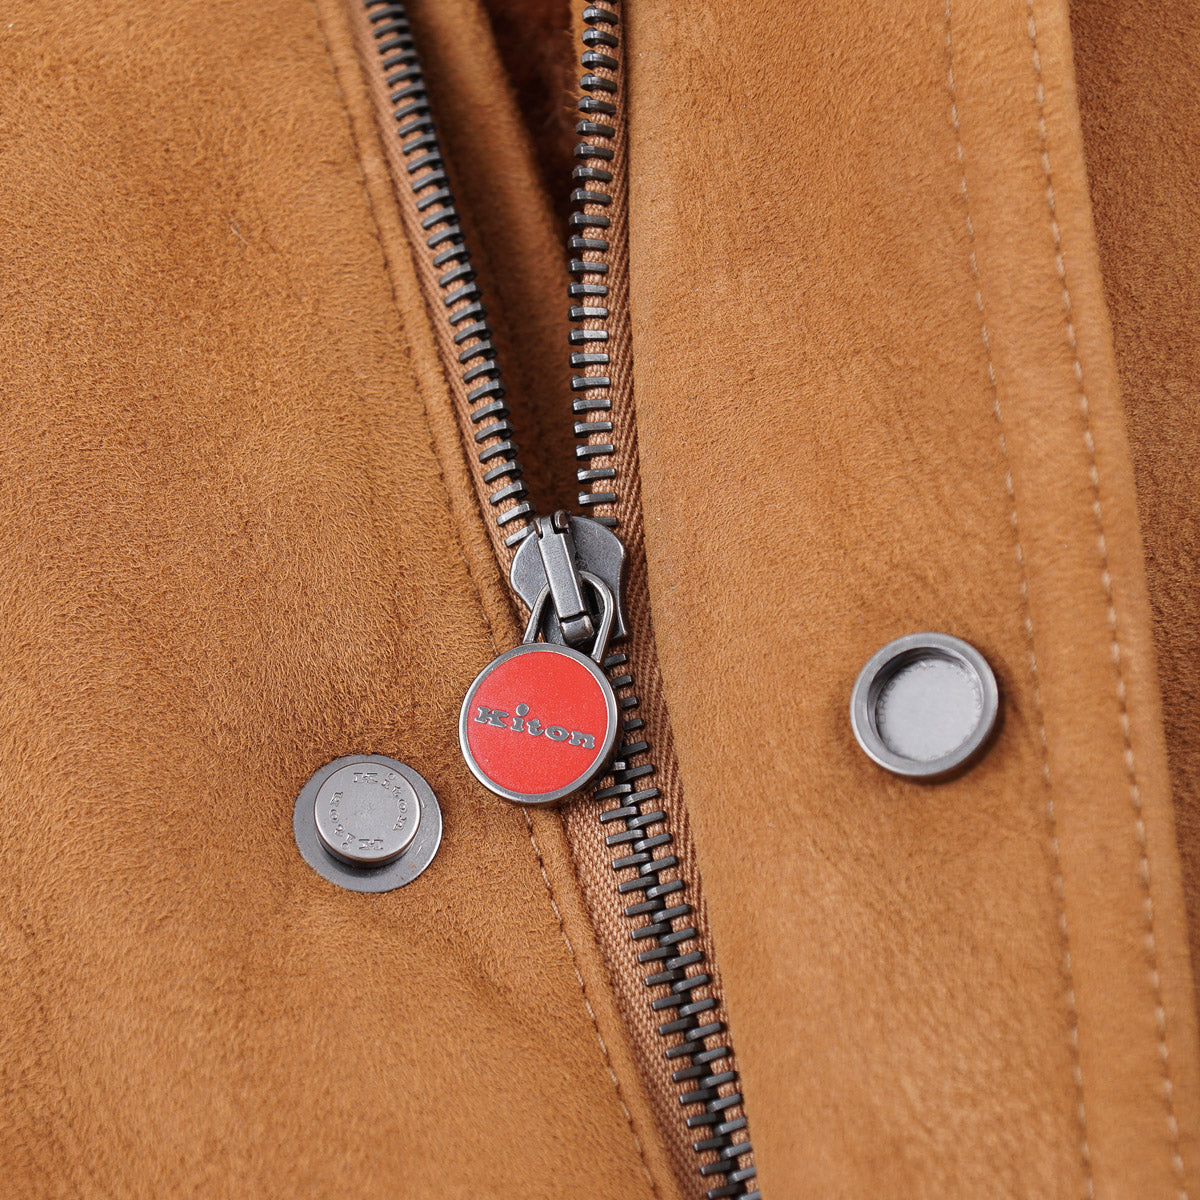 Kiton Plush Shearling-Lined Leather Jacket - Top Shelf Apparel